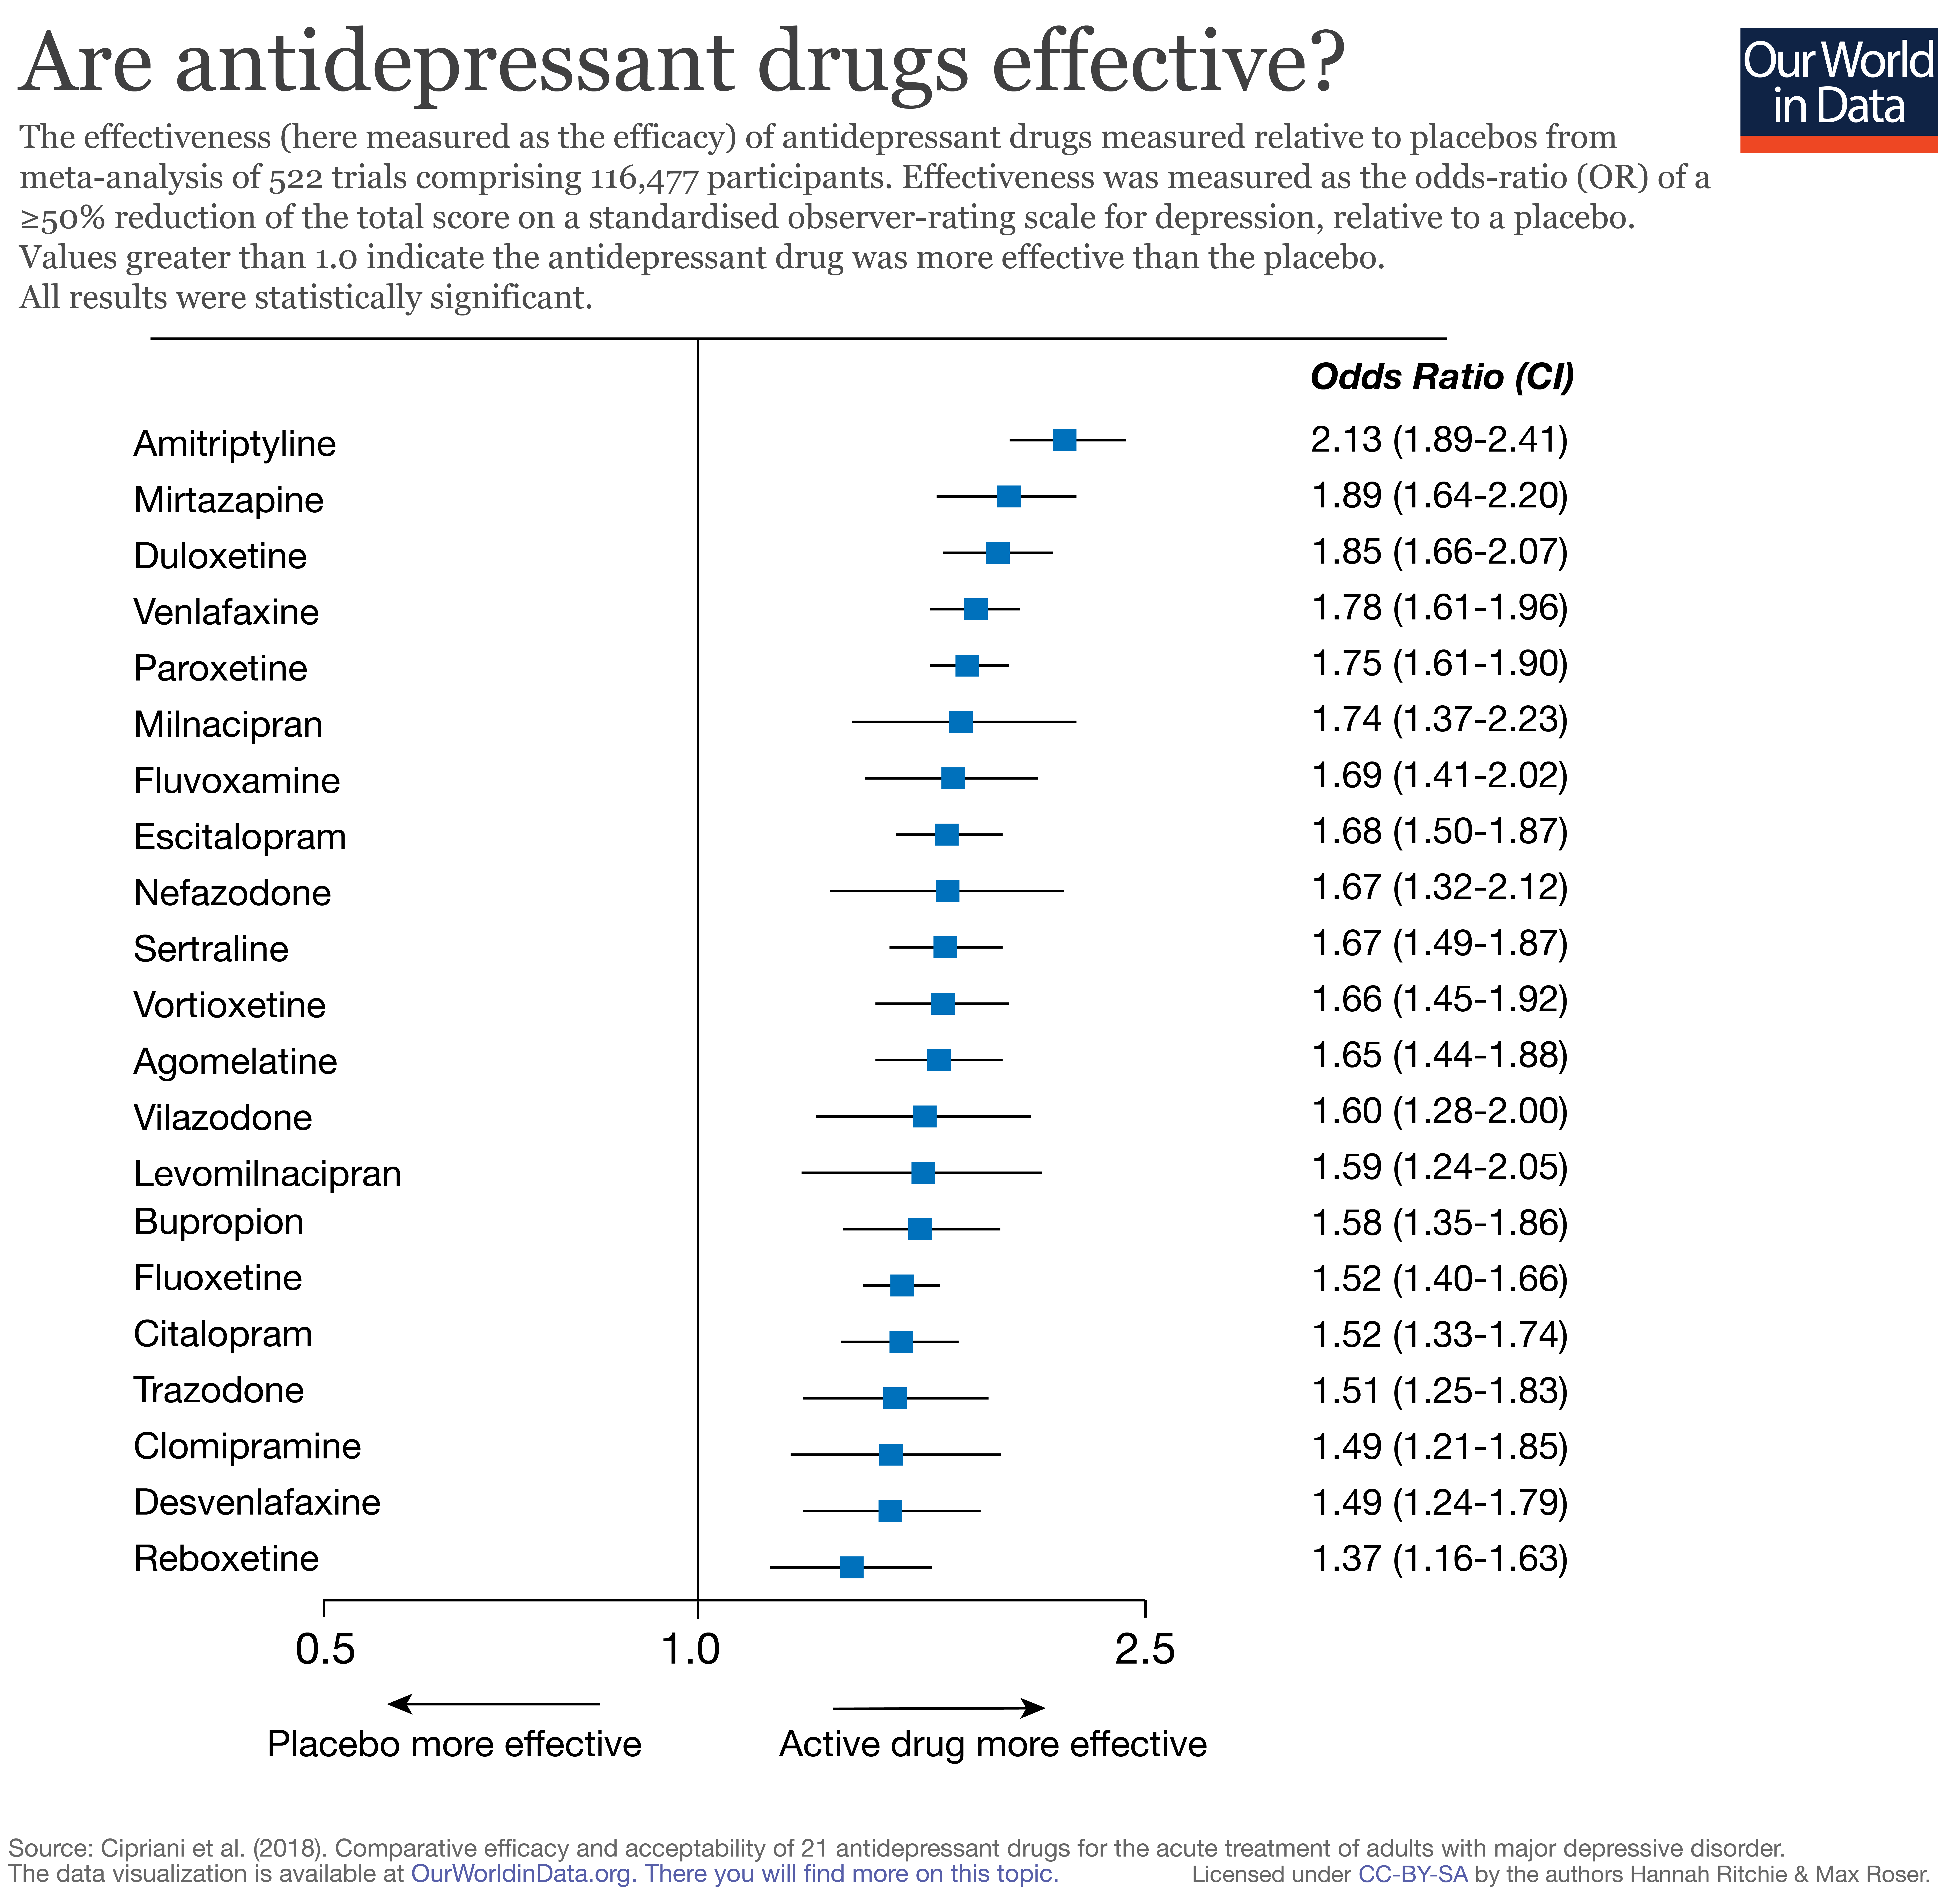 Are antidepressants effective 